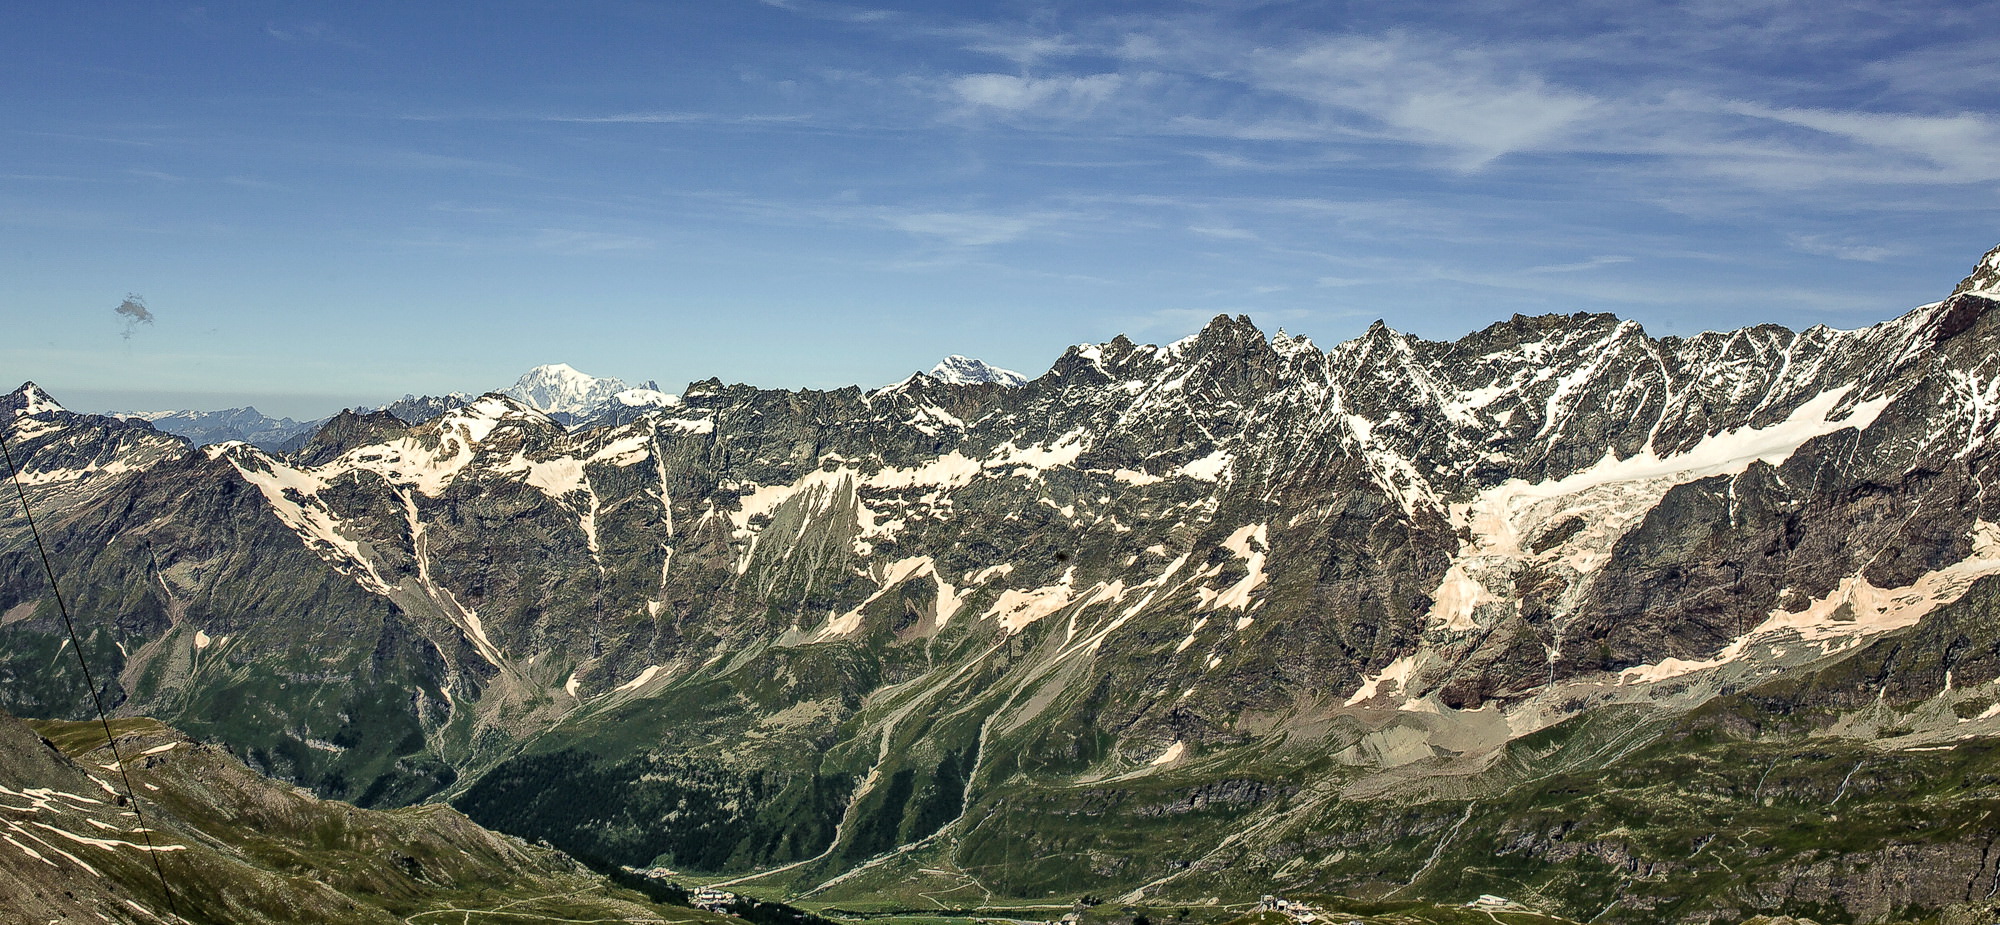 The Alps 2014 Italy Matterhorn 4